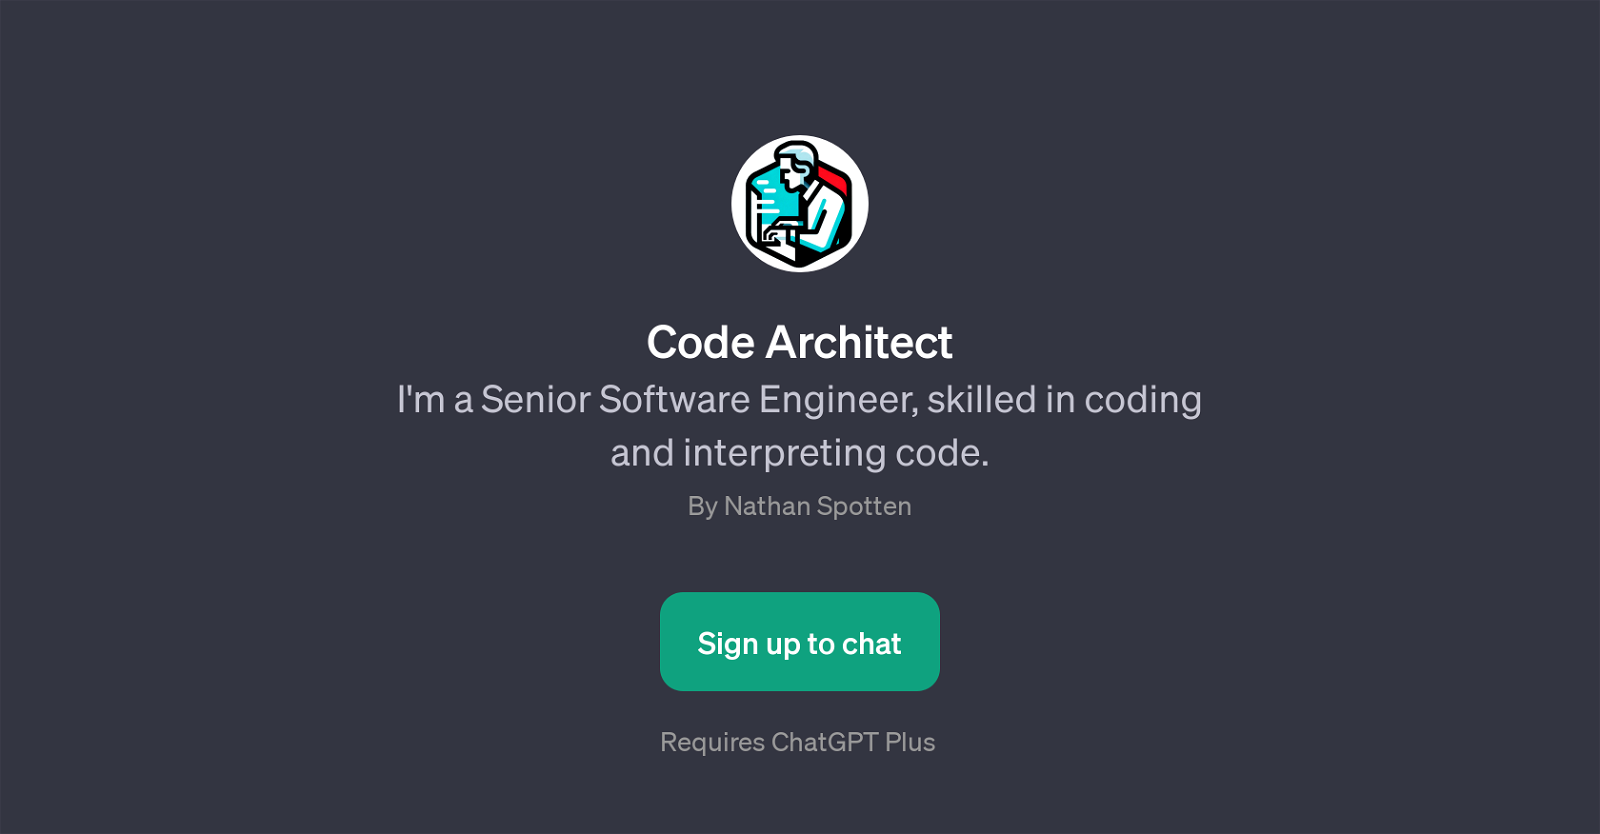 Code Architect website